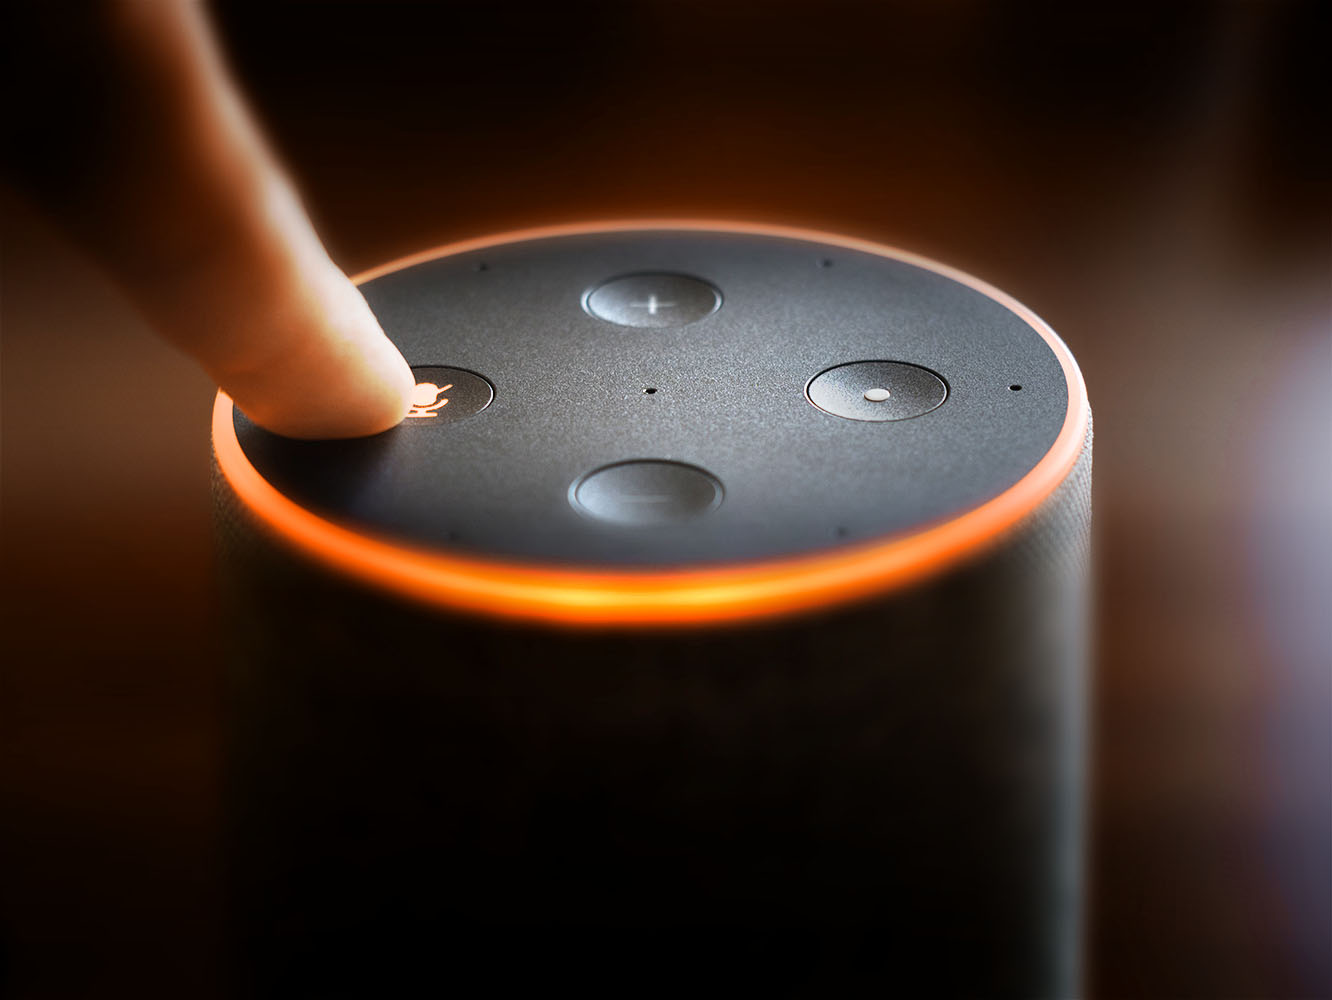 Black and orange smart speaker